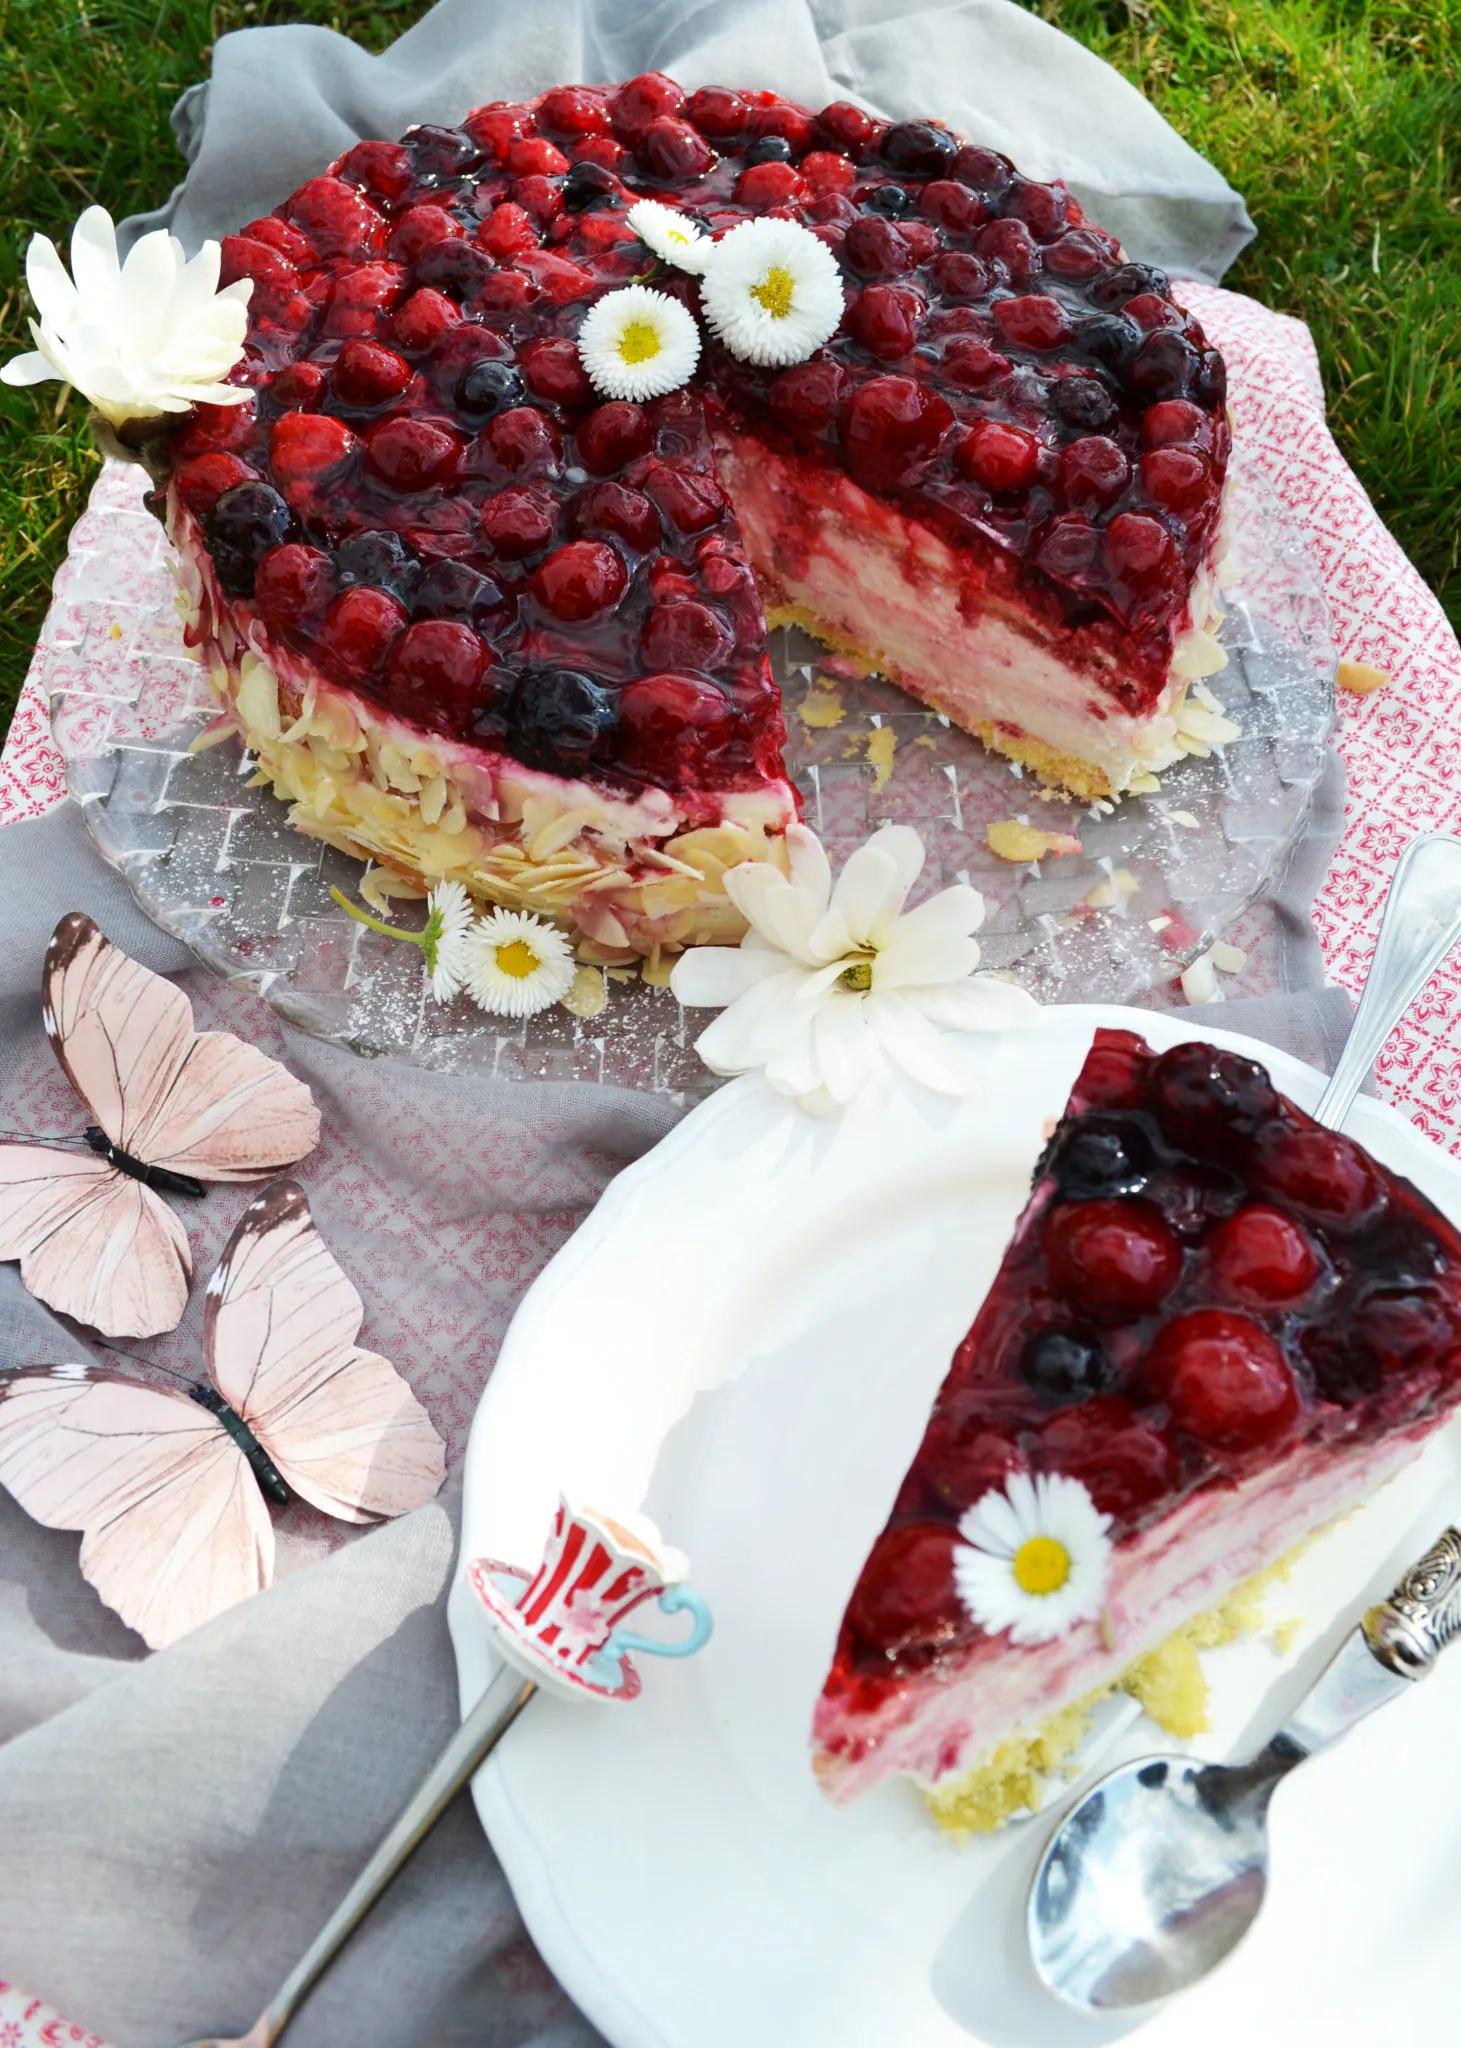 Wir feiern Geburtstag! Topfen-Joghurt-Torte mit Himbeeren ...